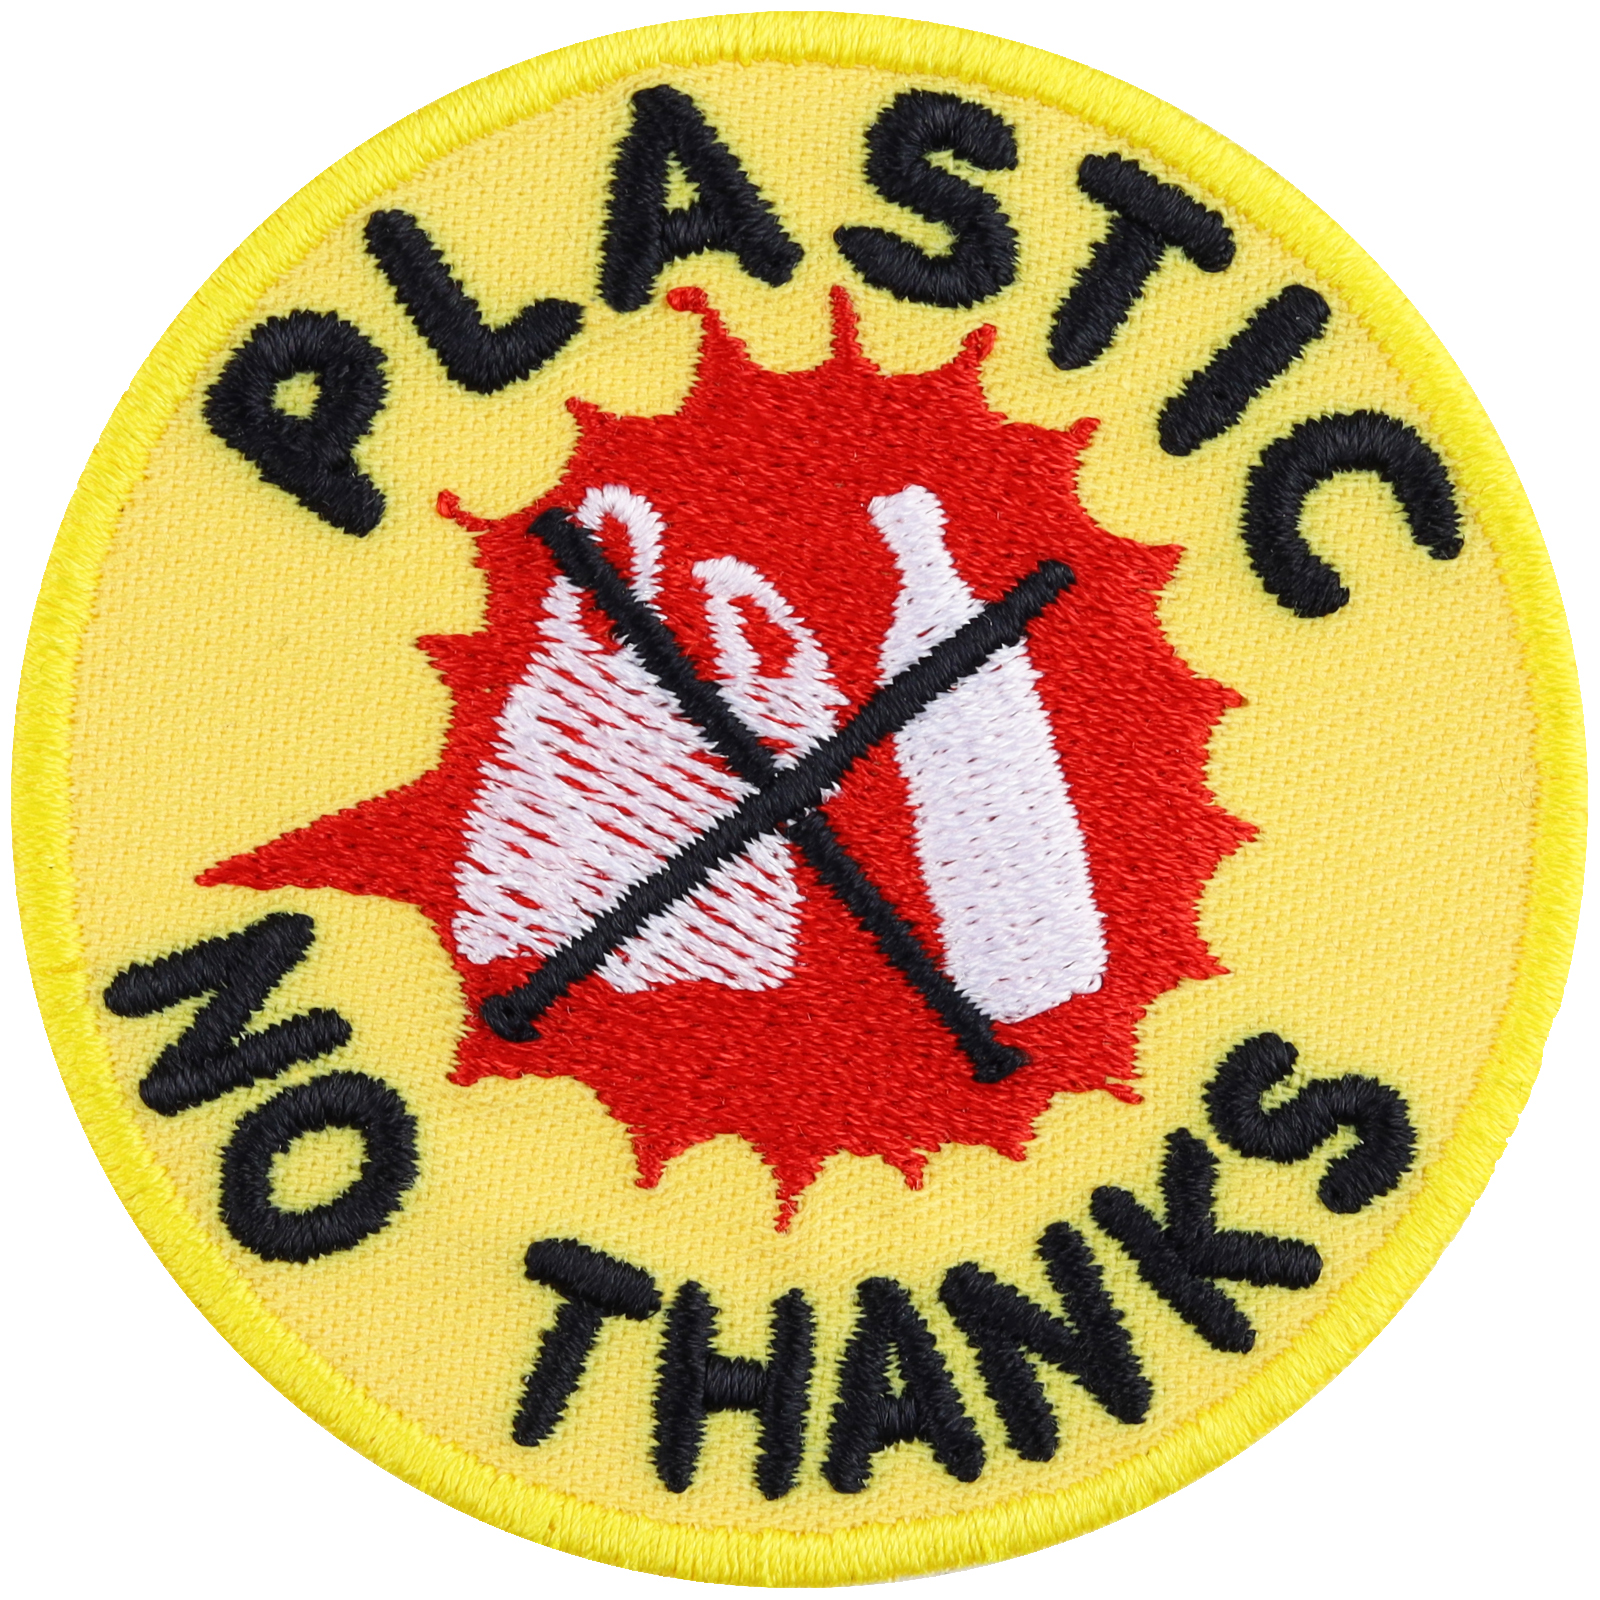 Plastic - No thanks - Patch